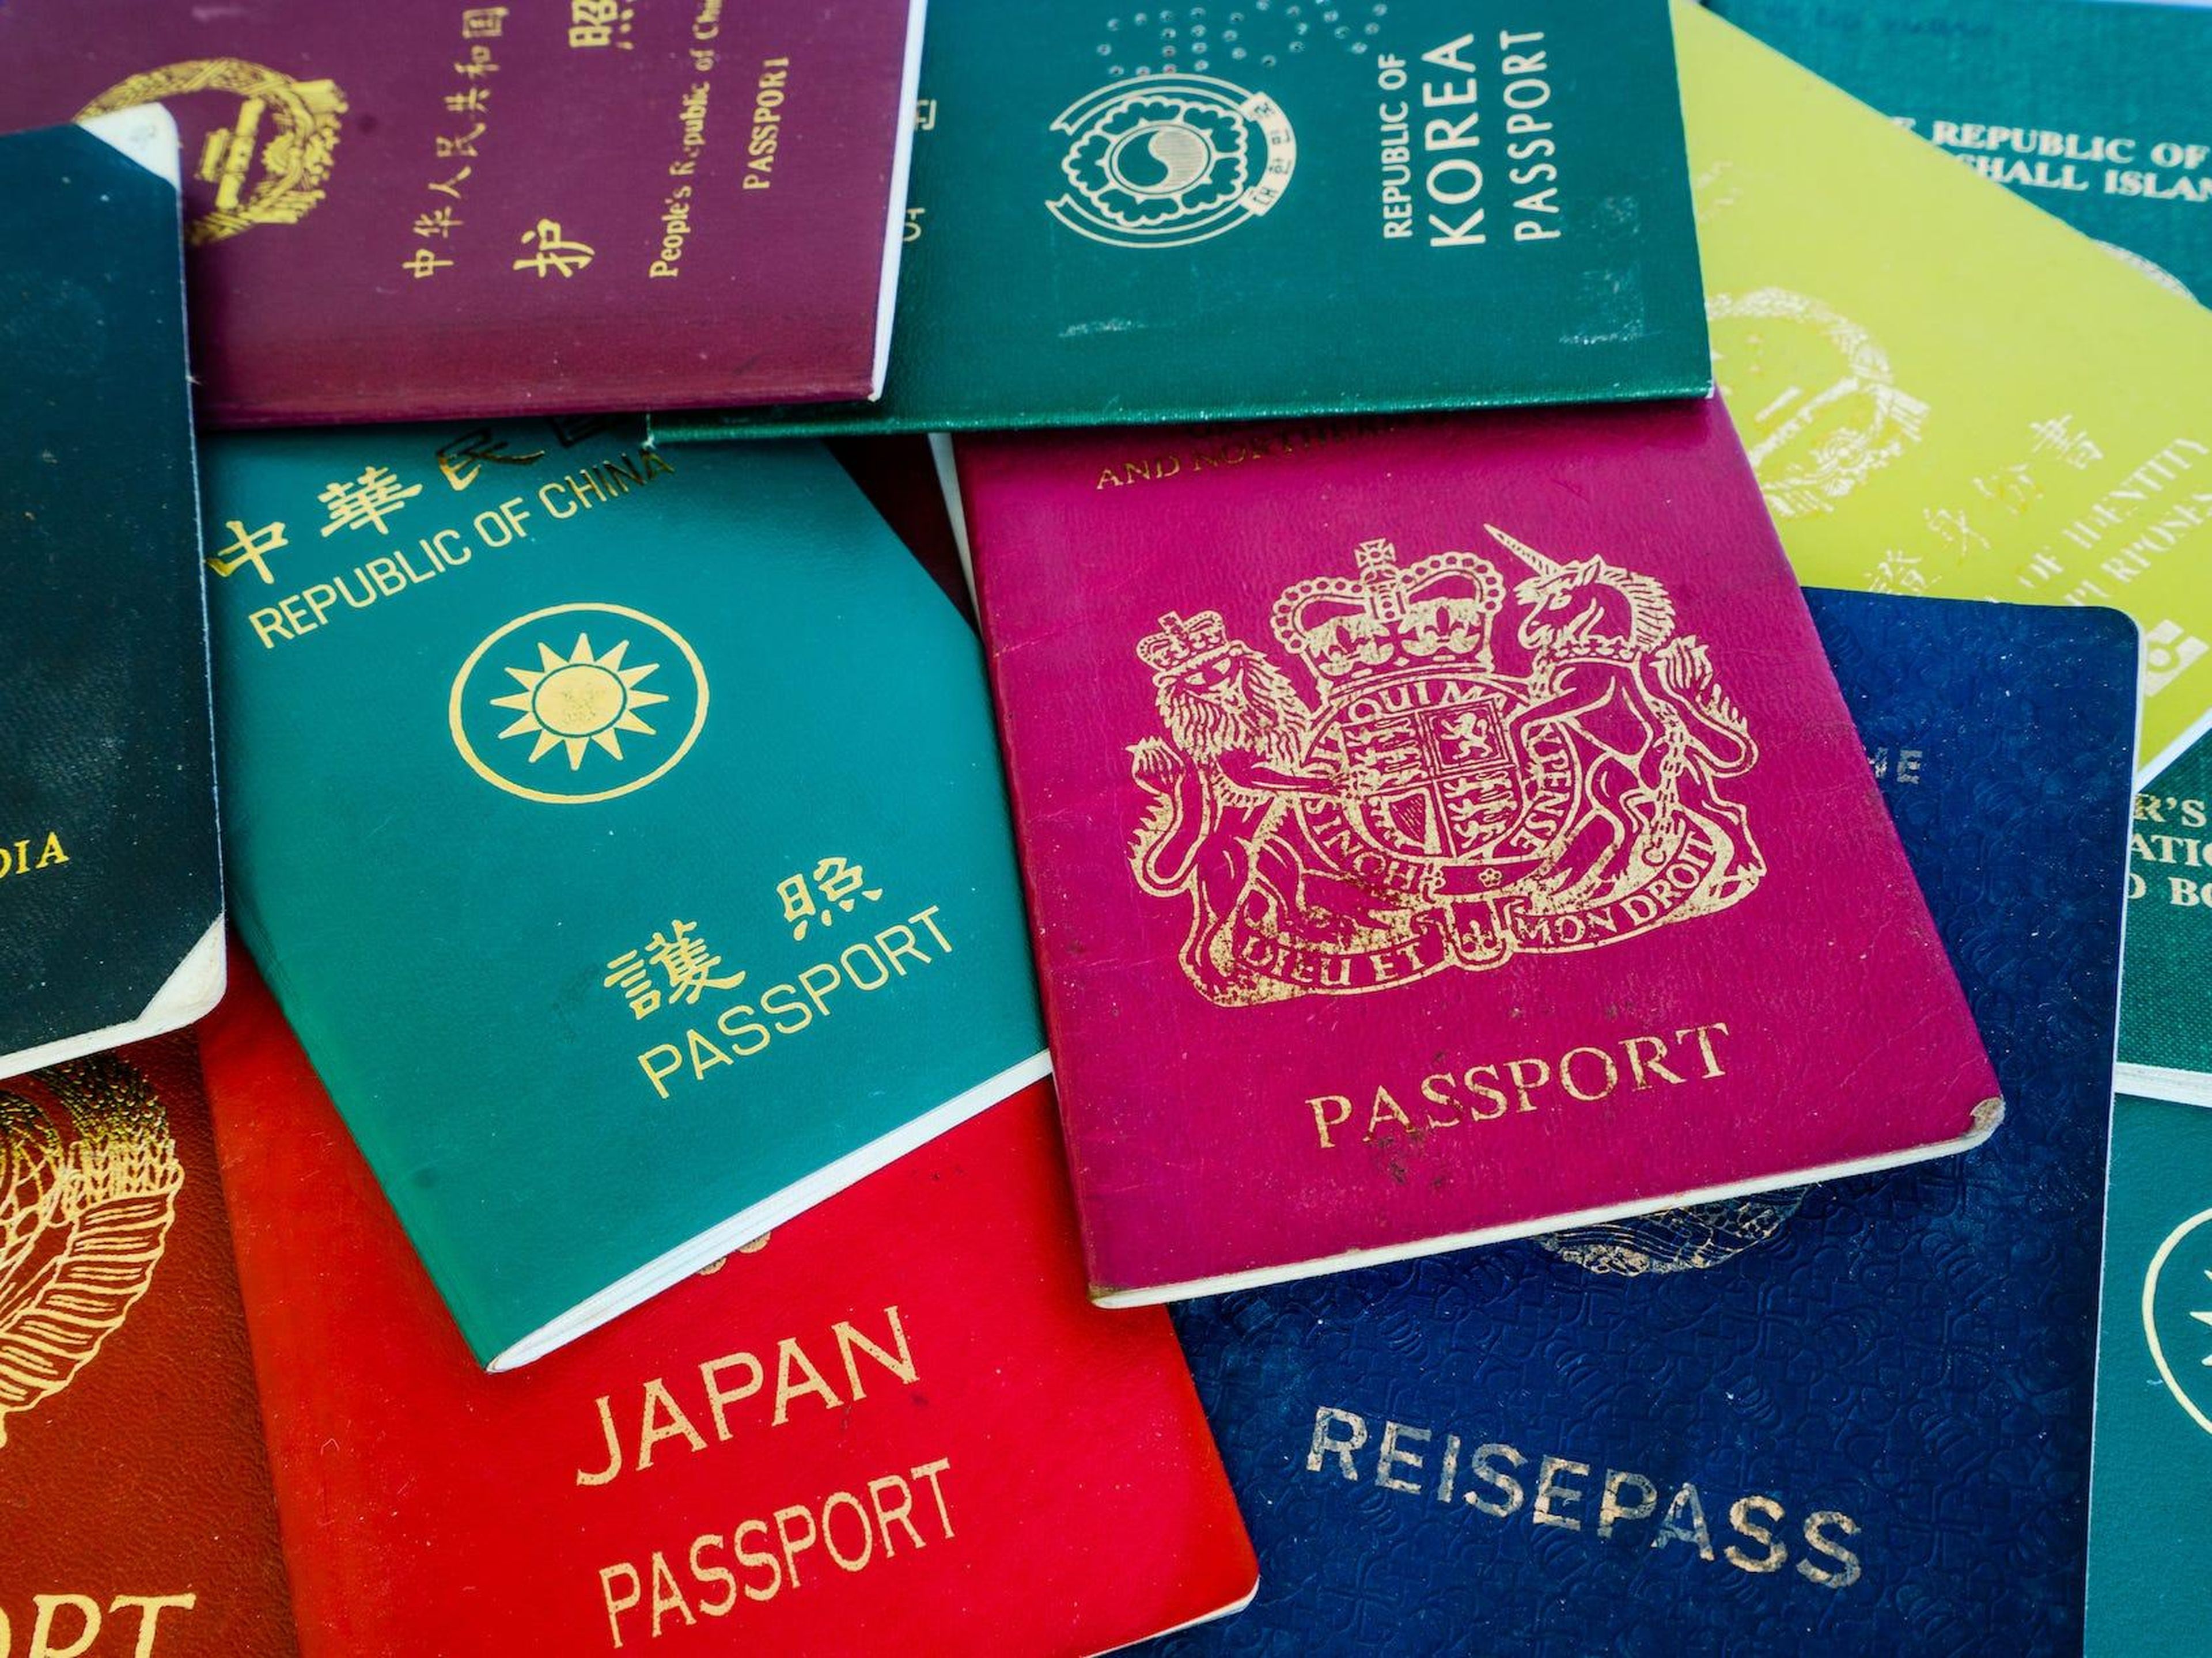 "Pandemic passports"